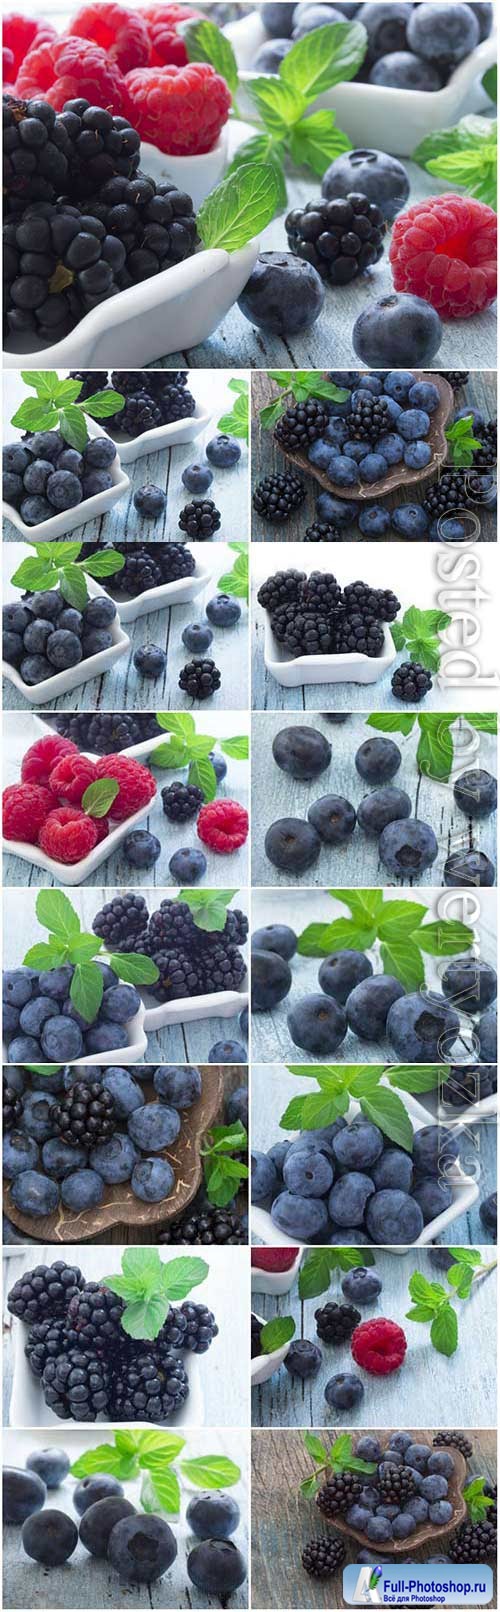 Blueberries raspberries and blackberries stock photo